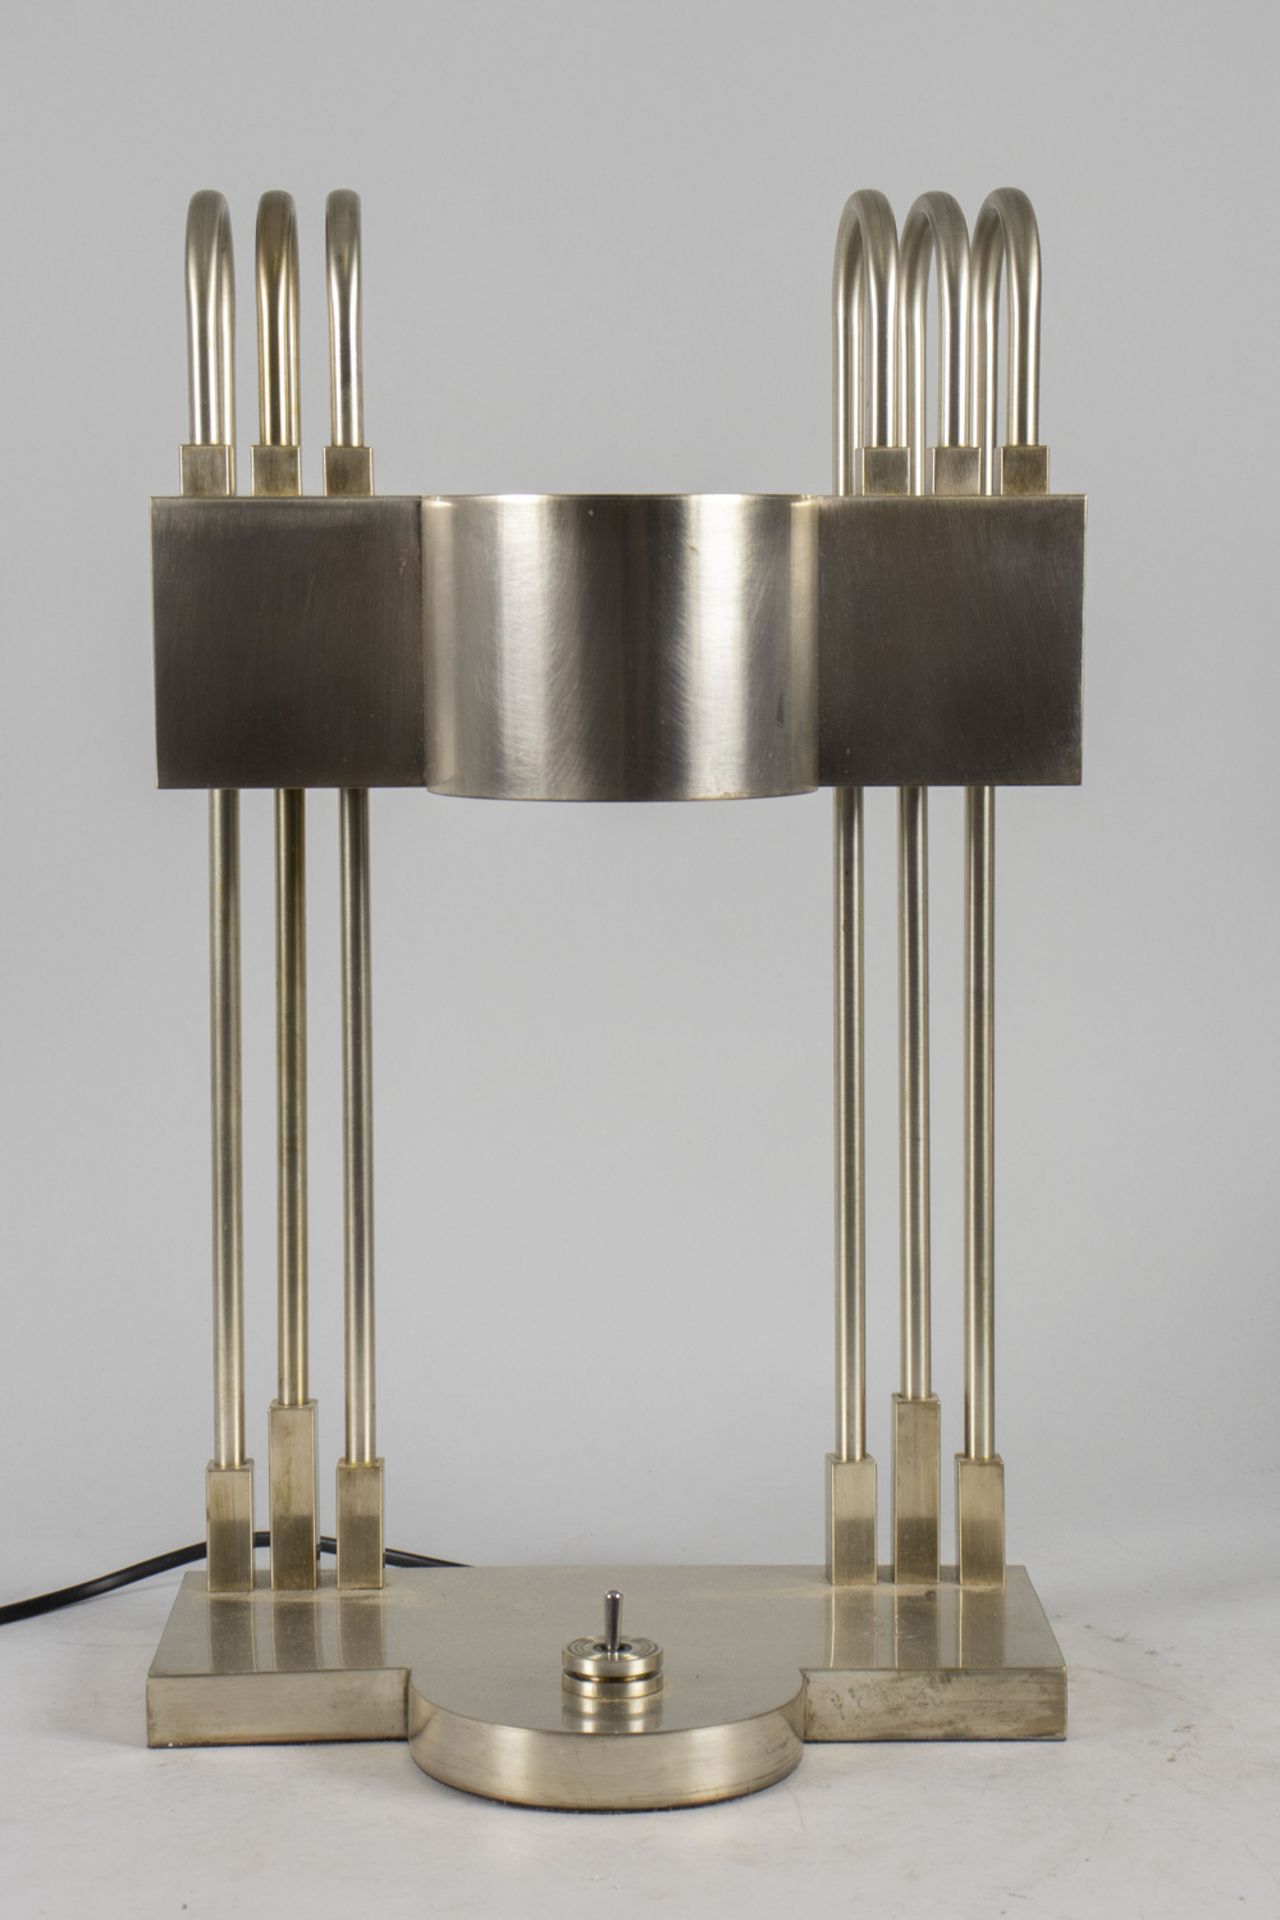 Bauhaus-Design Tischlampe / A Bauhaus design desk lamp, Entwurf um 1925